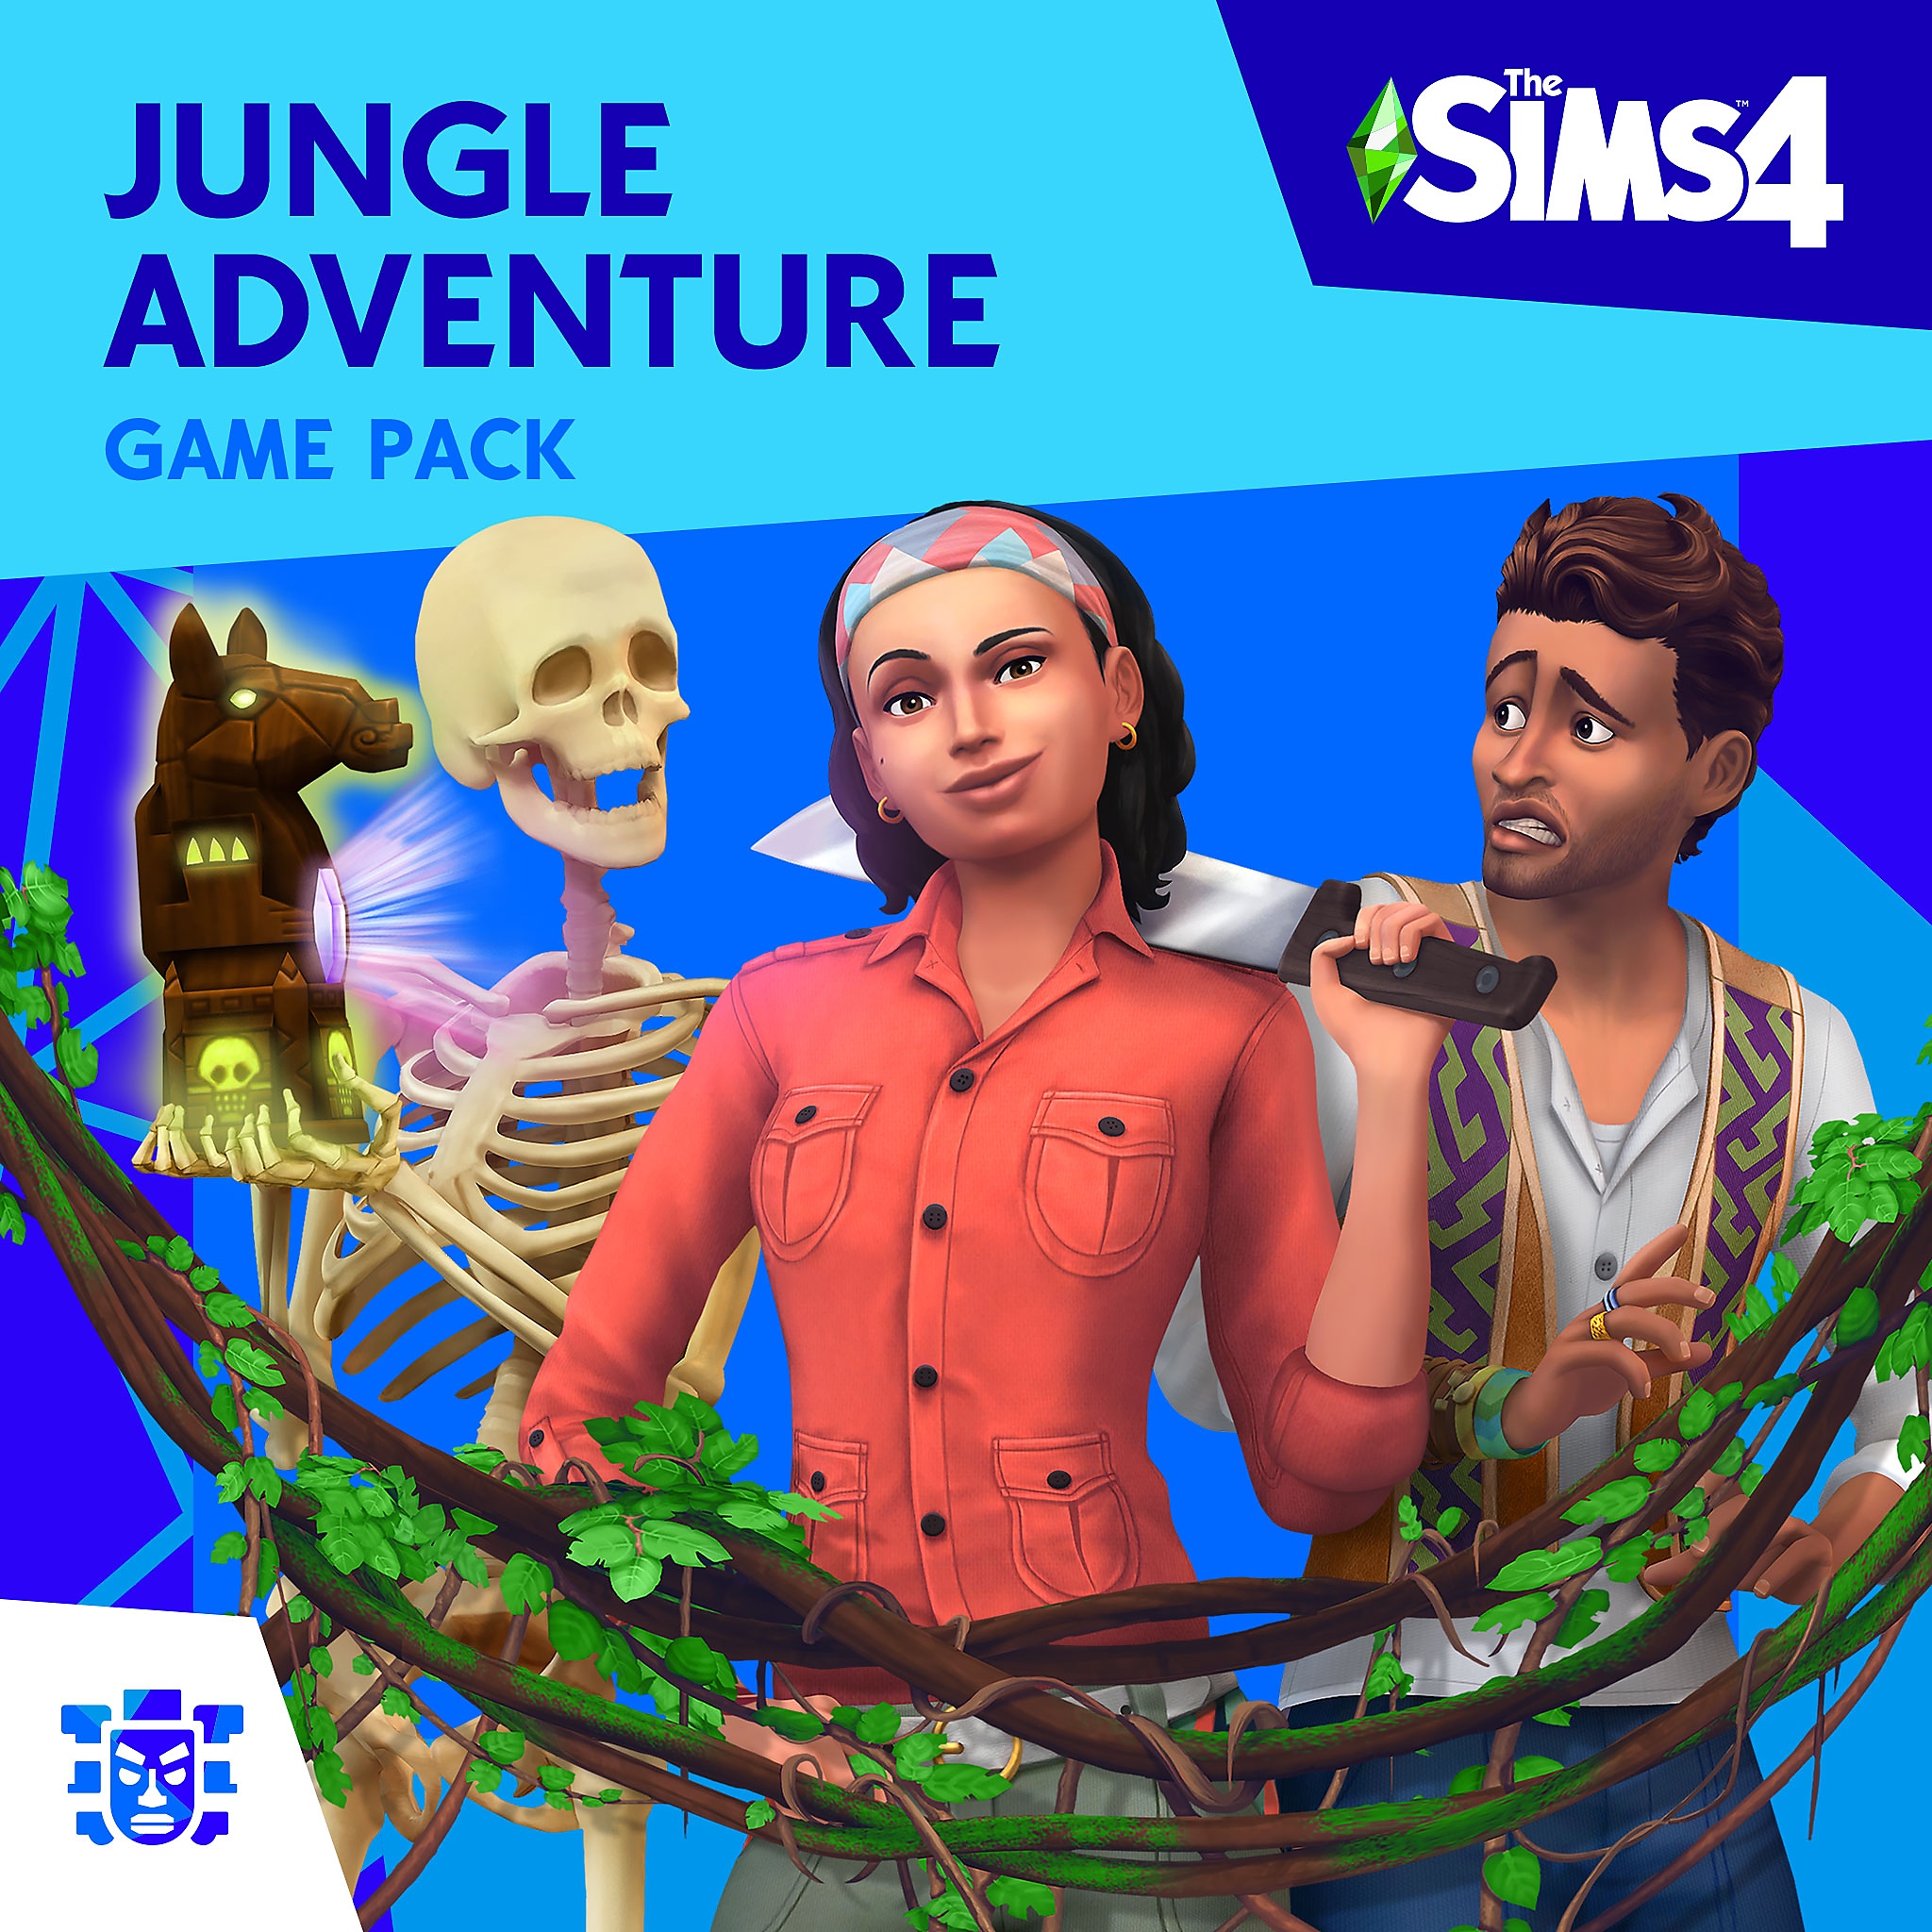 Jungle Adventure Game Pack